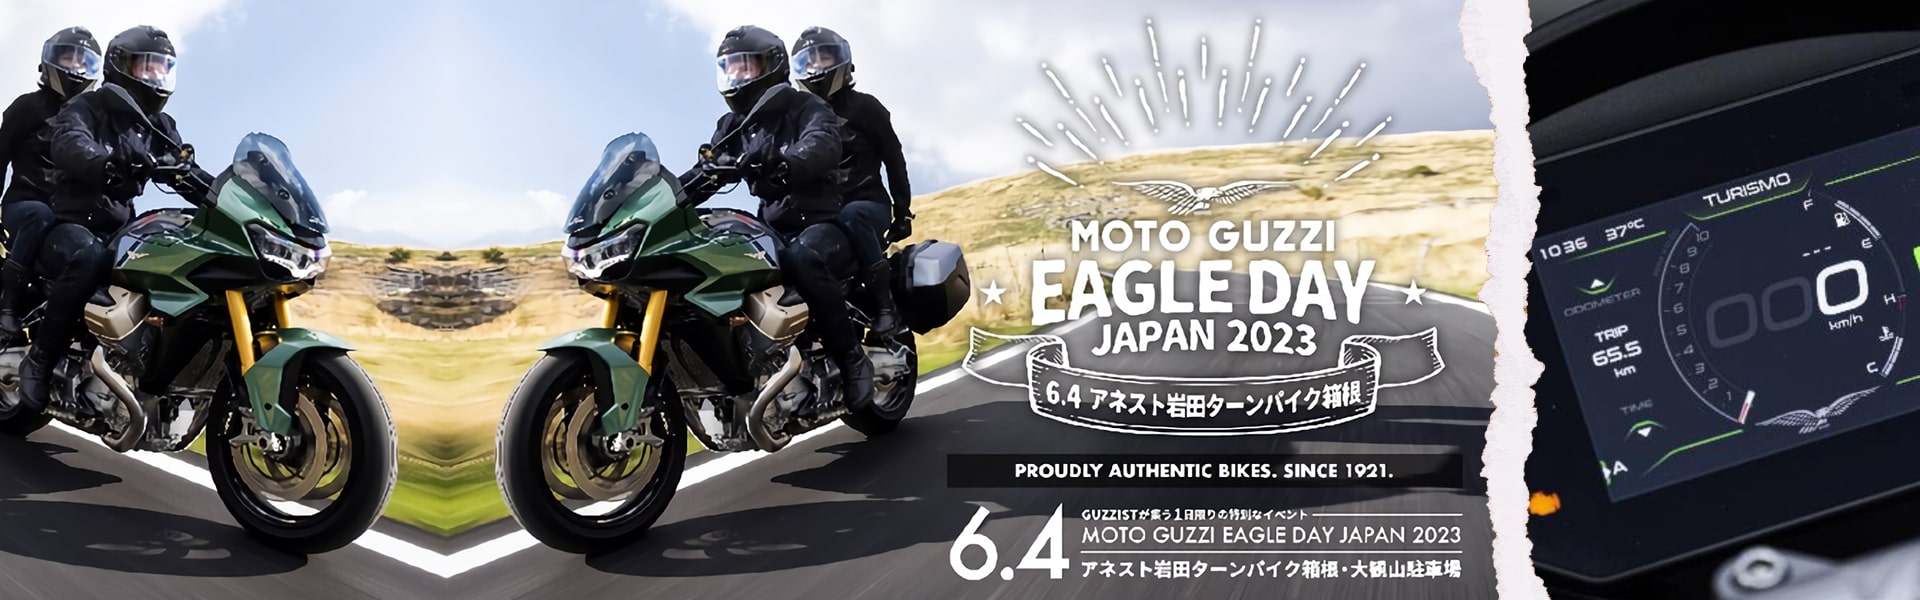 『MOTO GUZZI  EAGLE DAY JAPAN 2023』開催のご案内